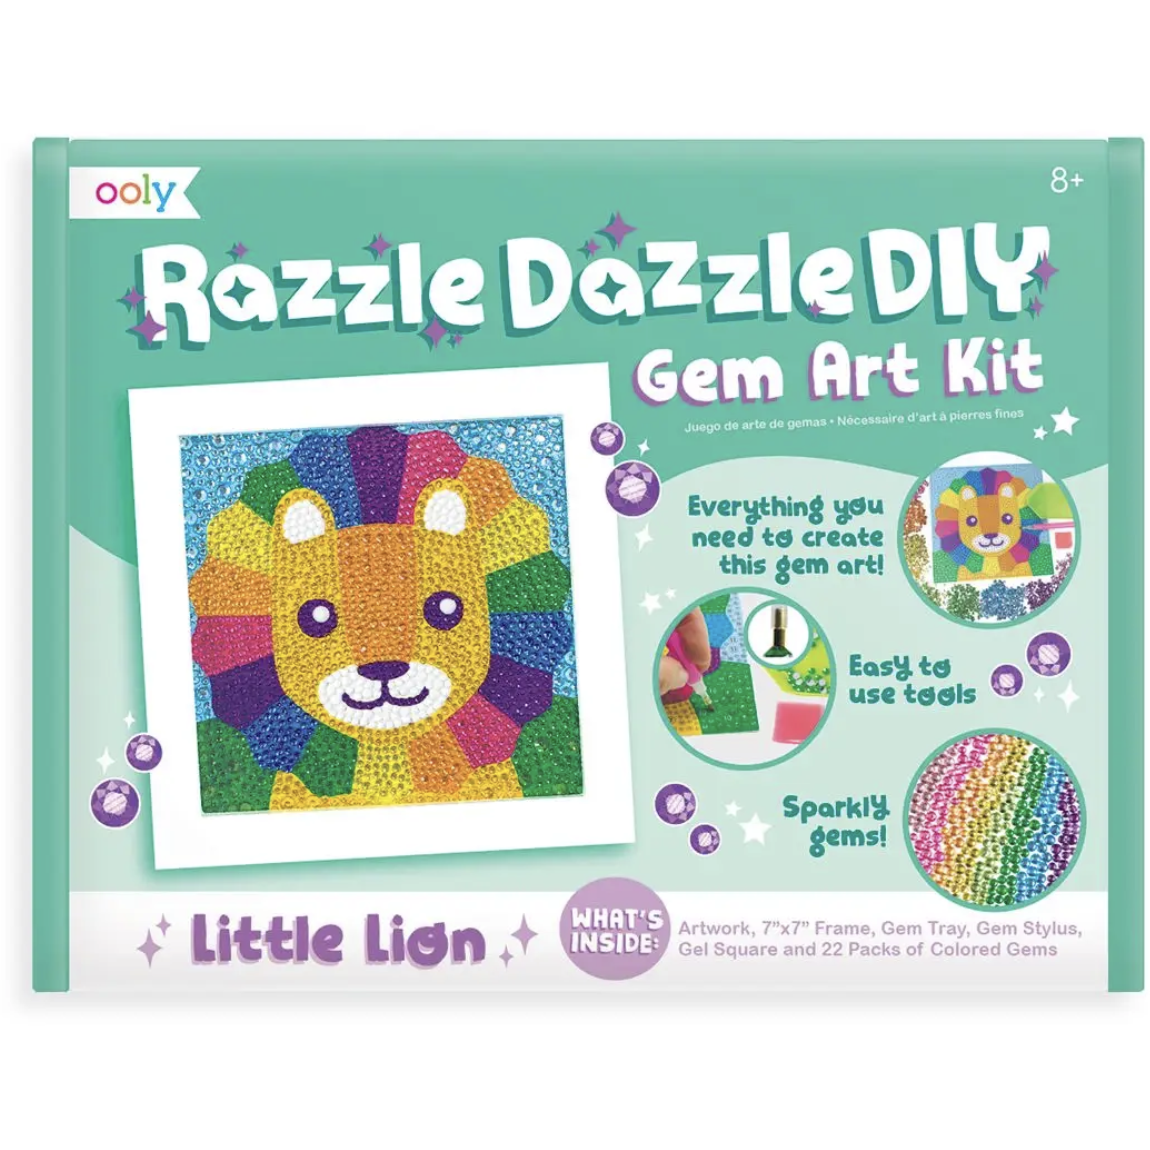 Razzle Dazzle Gem Art Kits